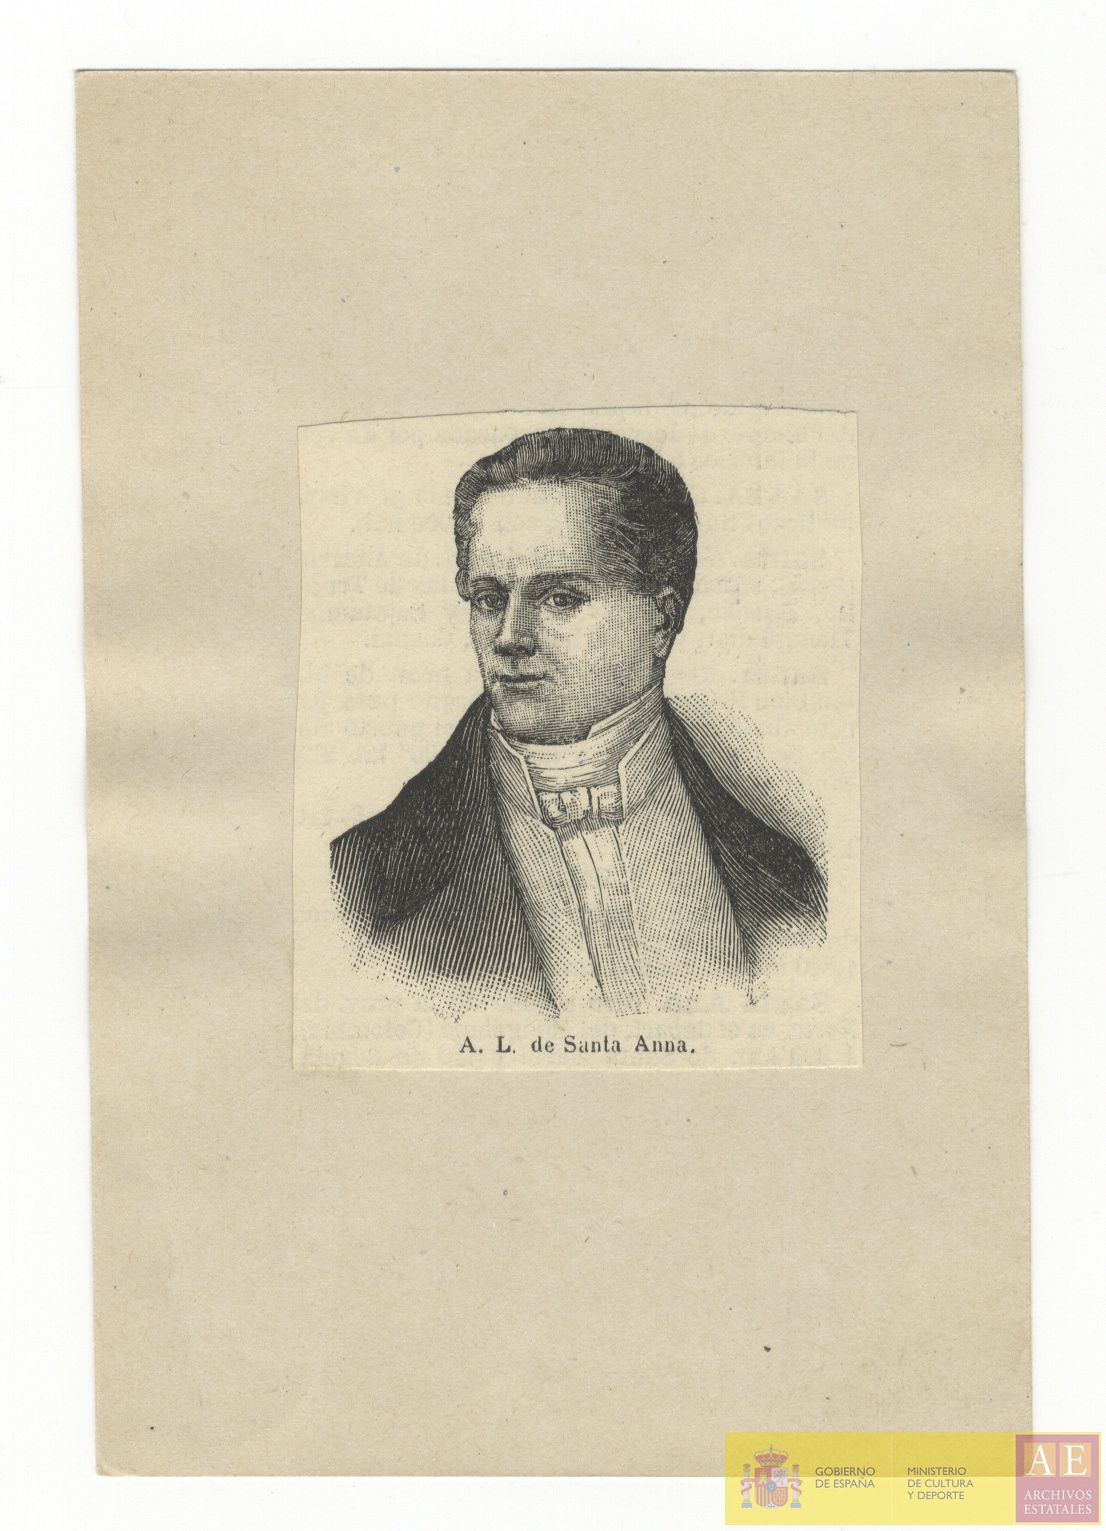 Antonio de Santa Anna